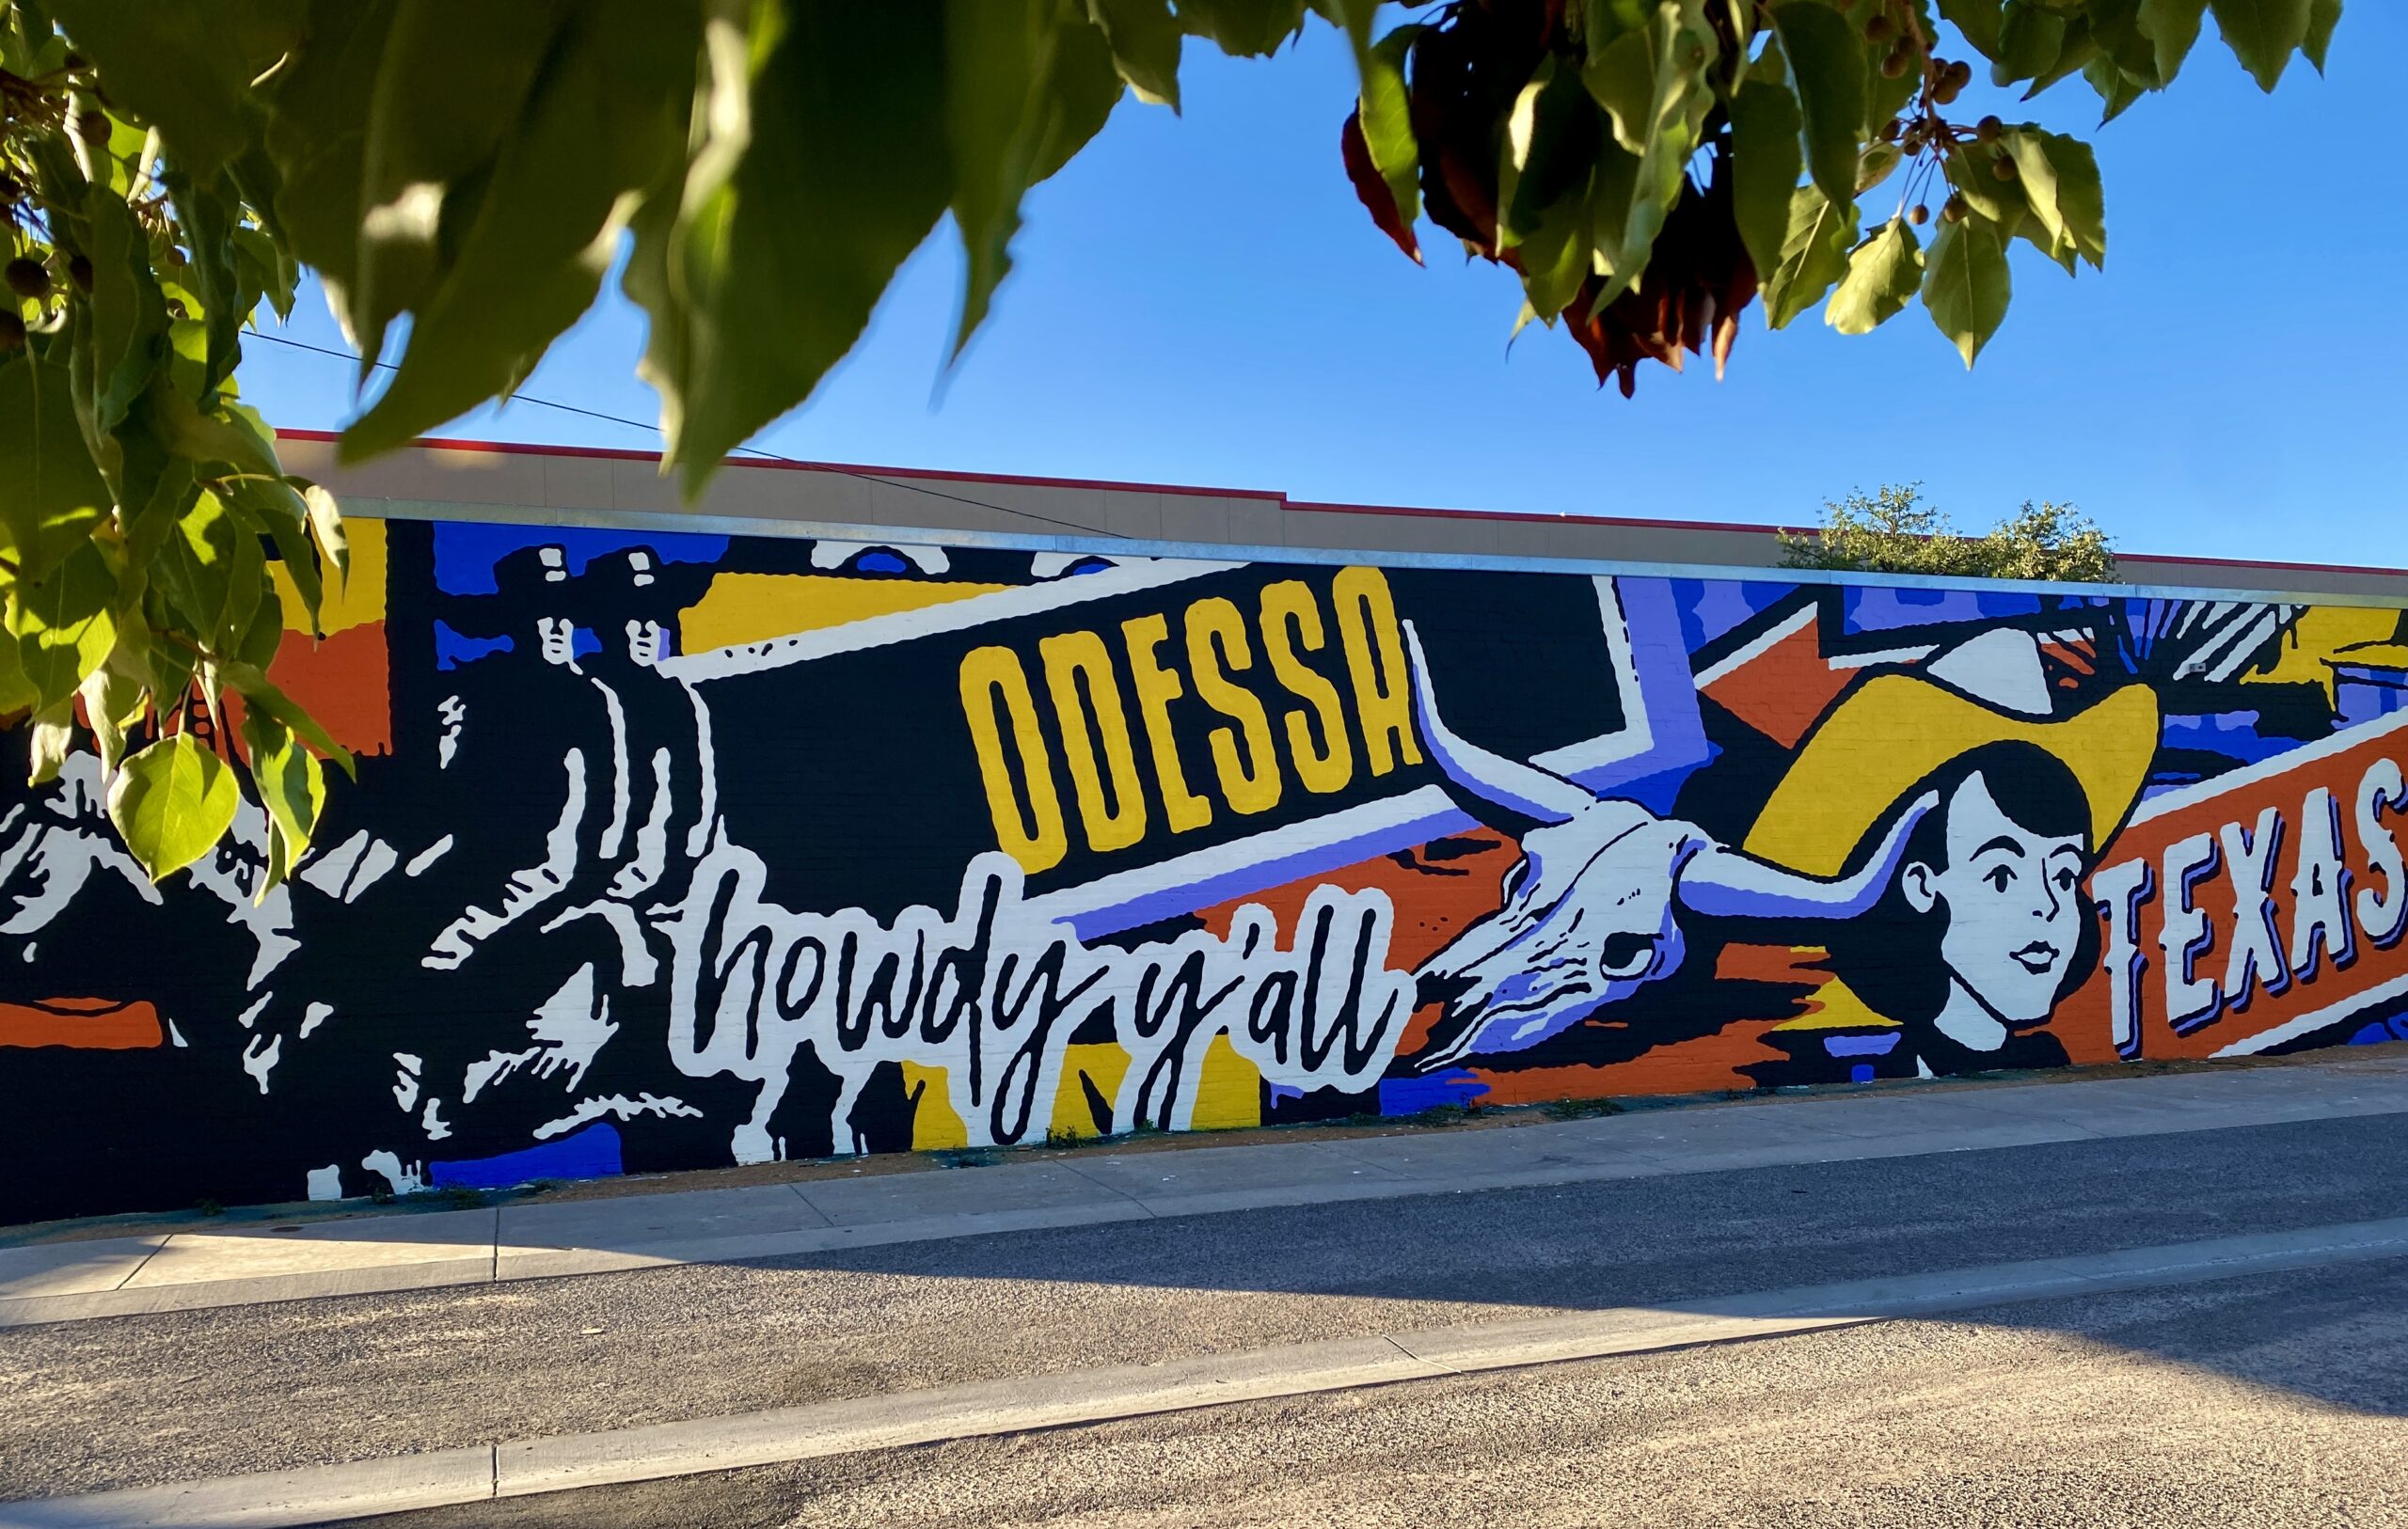 Howdy Ya'll Mural by Greg Gossal in Odessa, TX